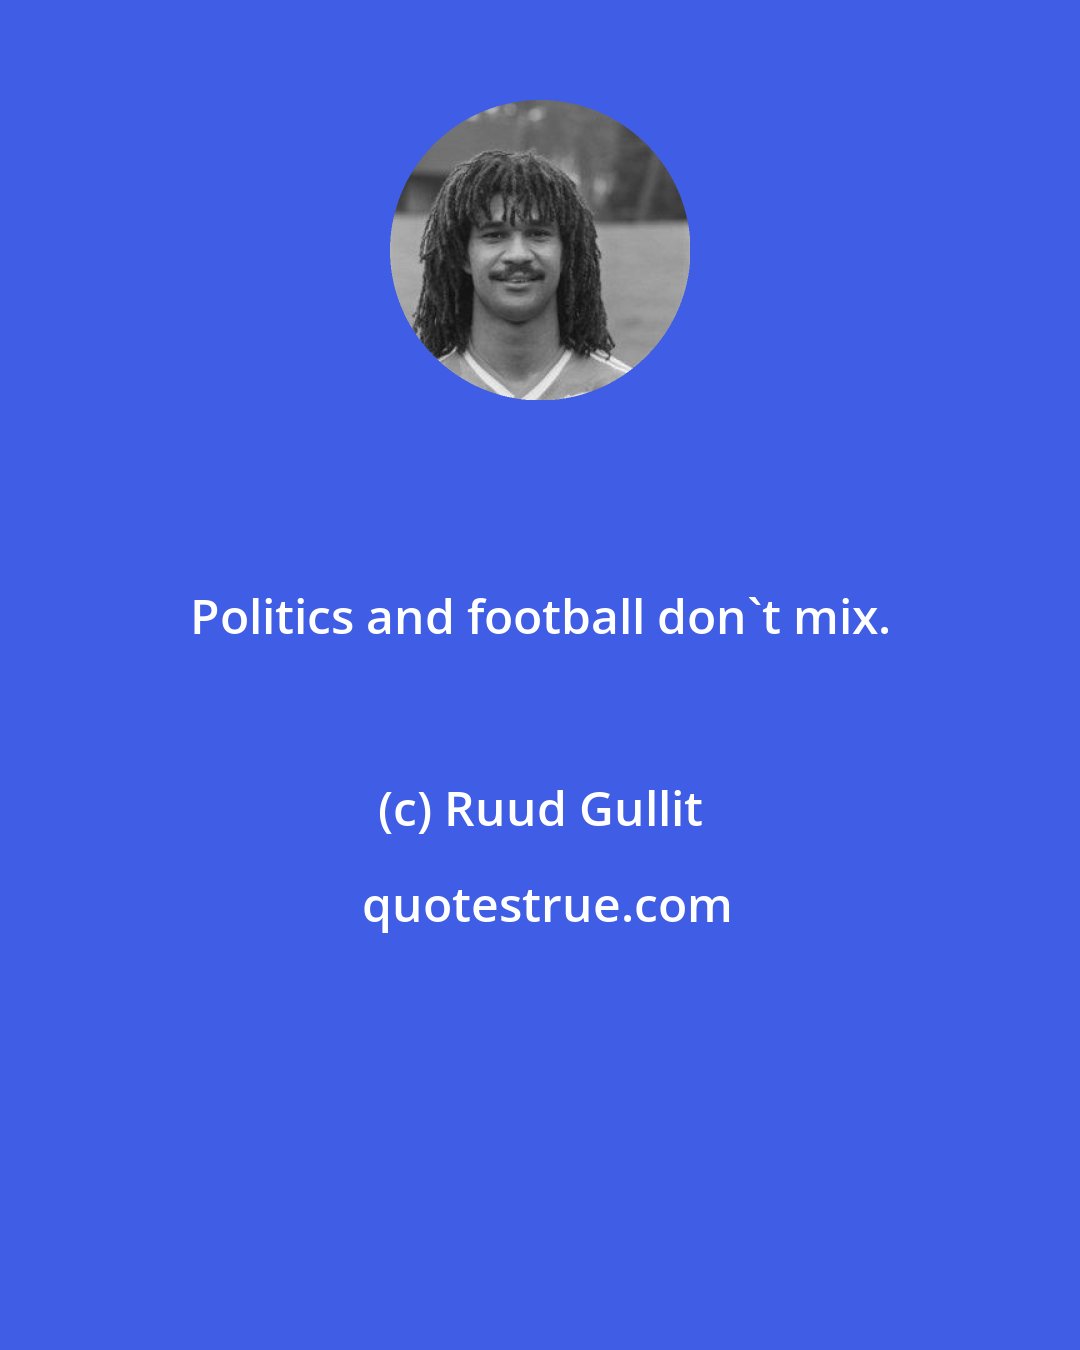 Ruud Gullit: Politics and football don't mix.